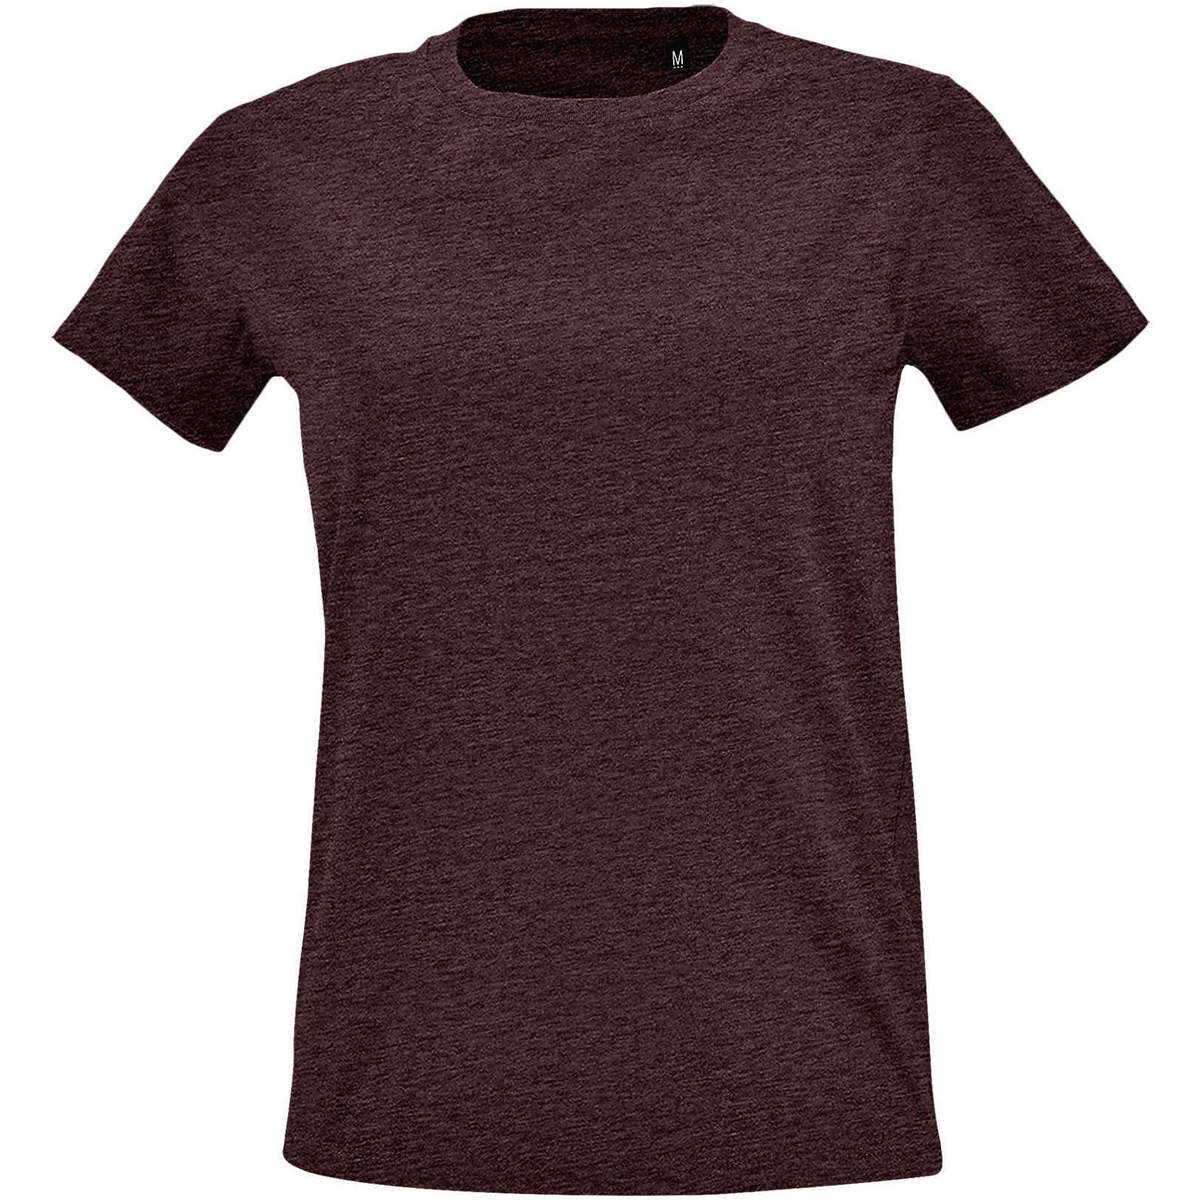 Textiel Dames T-shirts korte mouwen Sols Camiseta IMPERIAL FIT color Oxblood Other